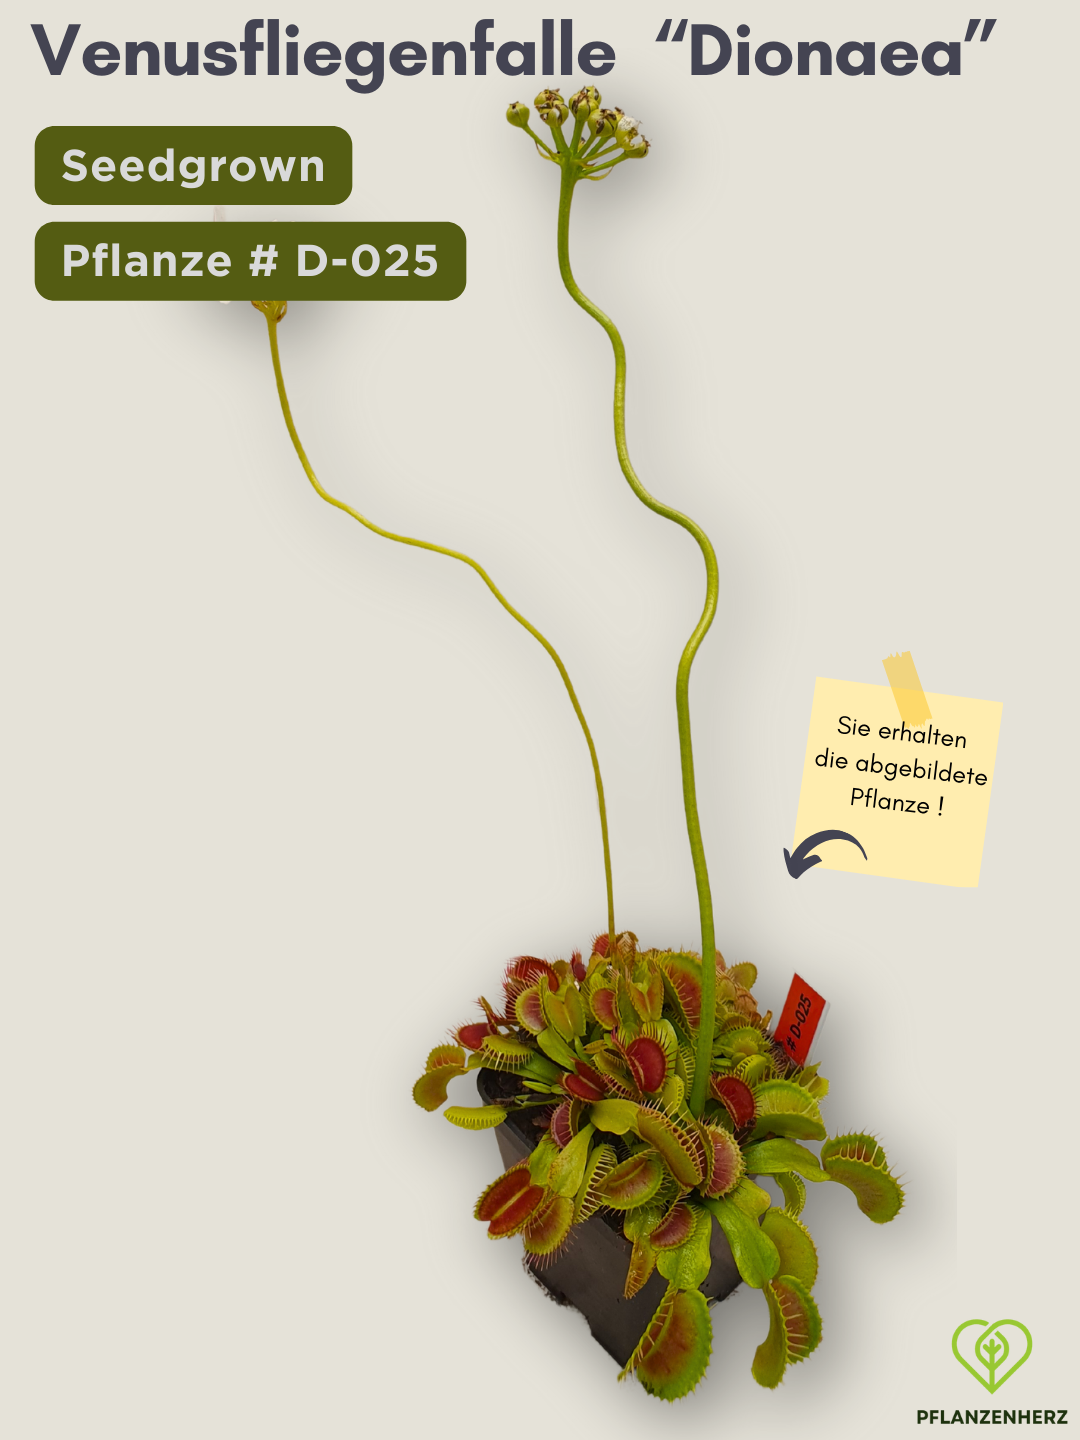 Venusfliegenfalle "Dionaea muscipula" Karnivoren, getopft 7x7cm, #D-025